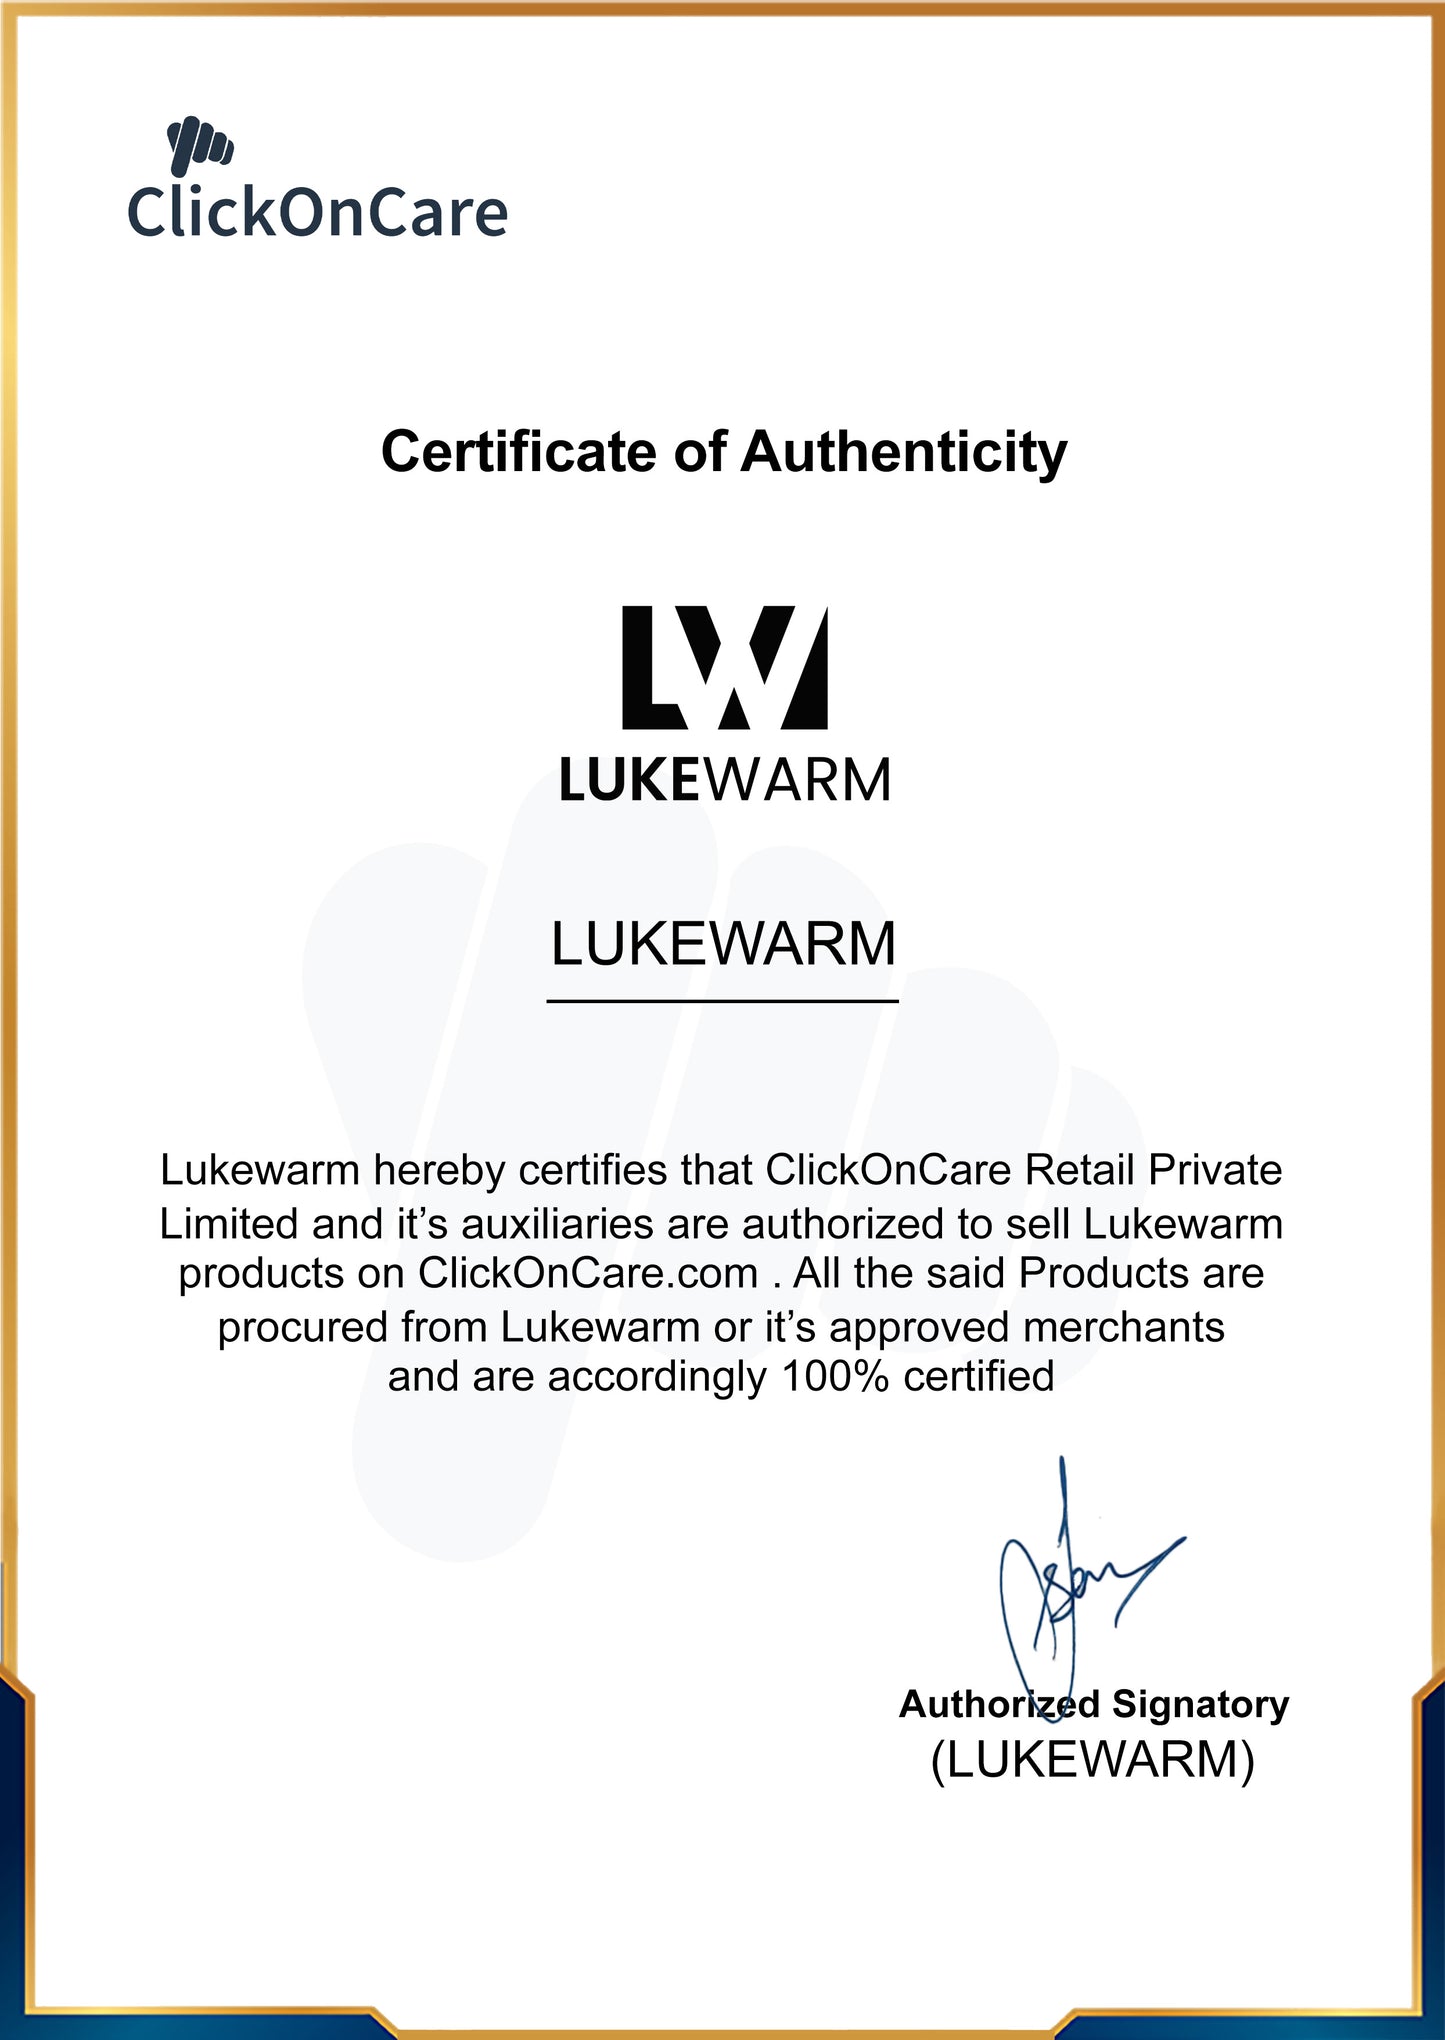 Buy Lukewarm Glutathione Face Wash + Lukewarm Sunscreen SPF 50+ PA++++ & Get Glowglutathione Strawberry 15 tabs Free